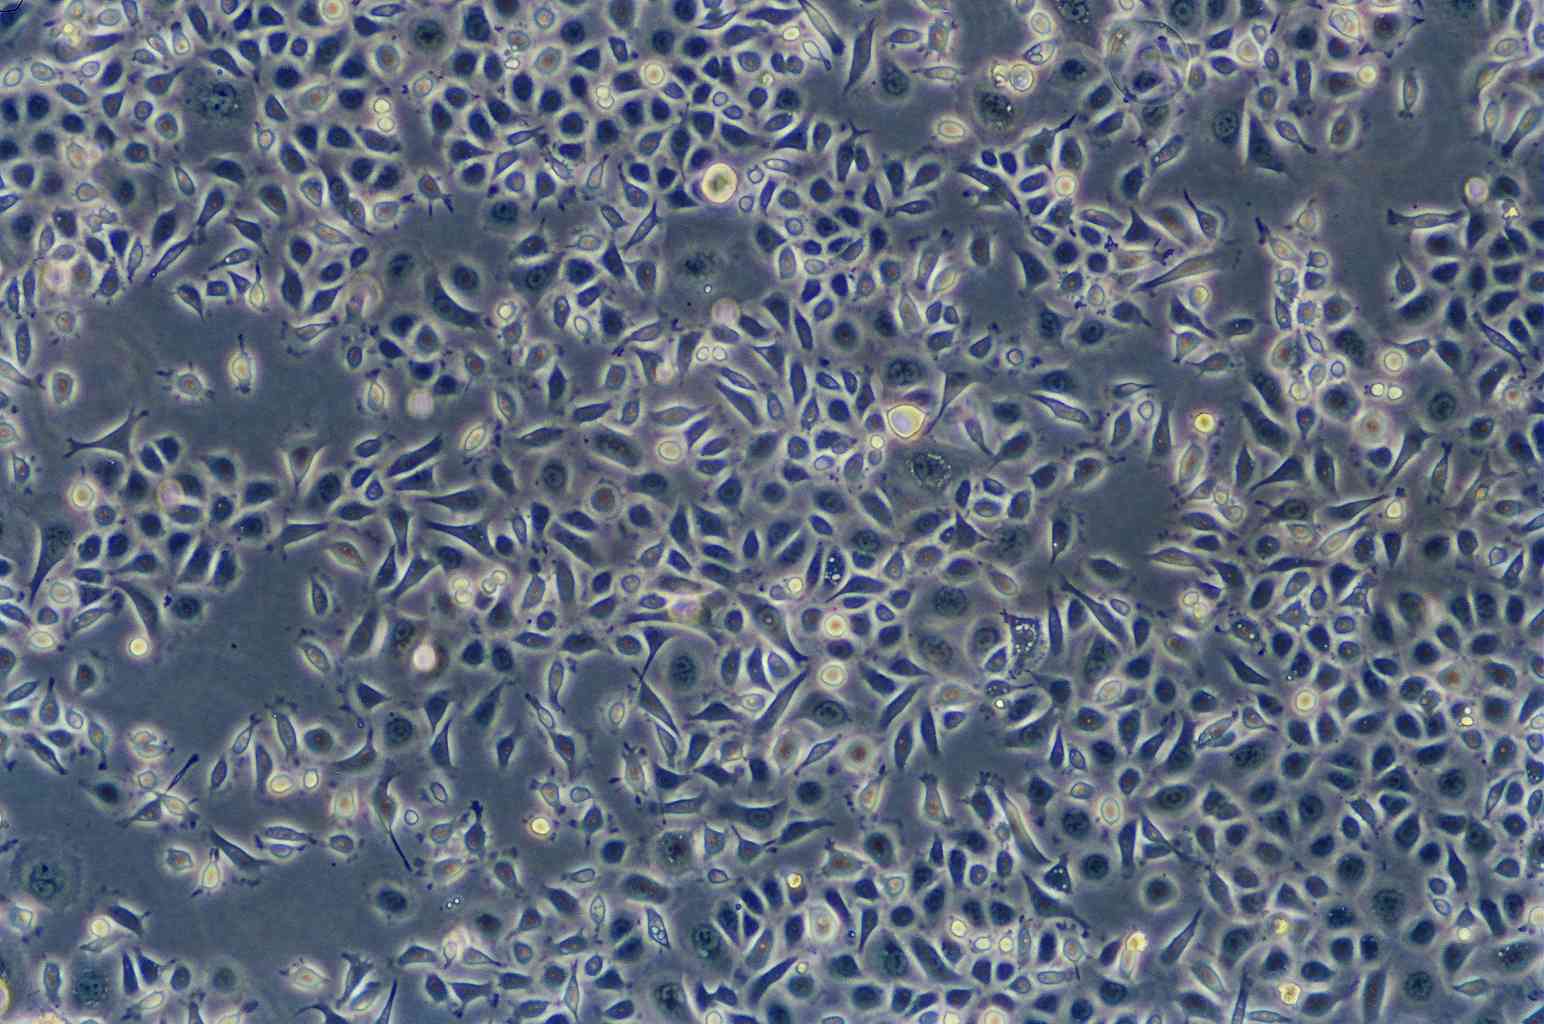 MES-SA/Dx5 cell line人子宫肉瘤细胞系,MES-SA/Dx5 cell line